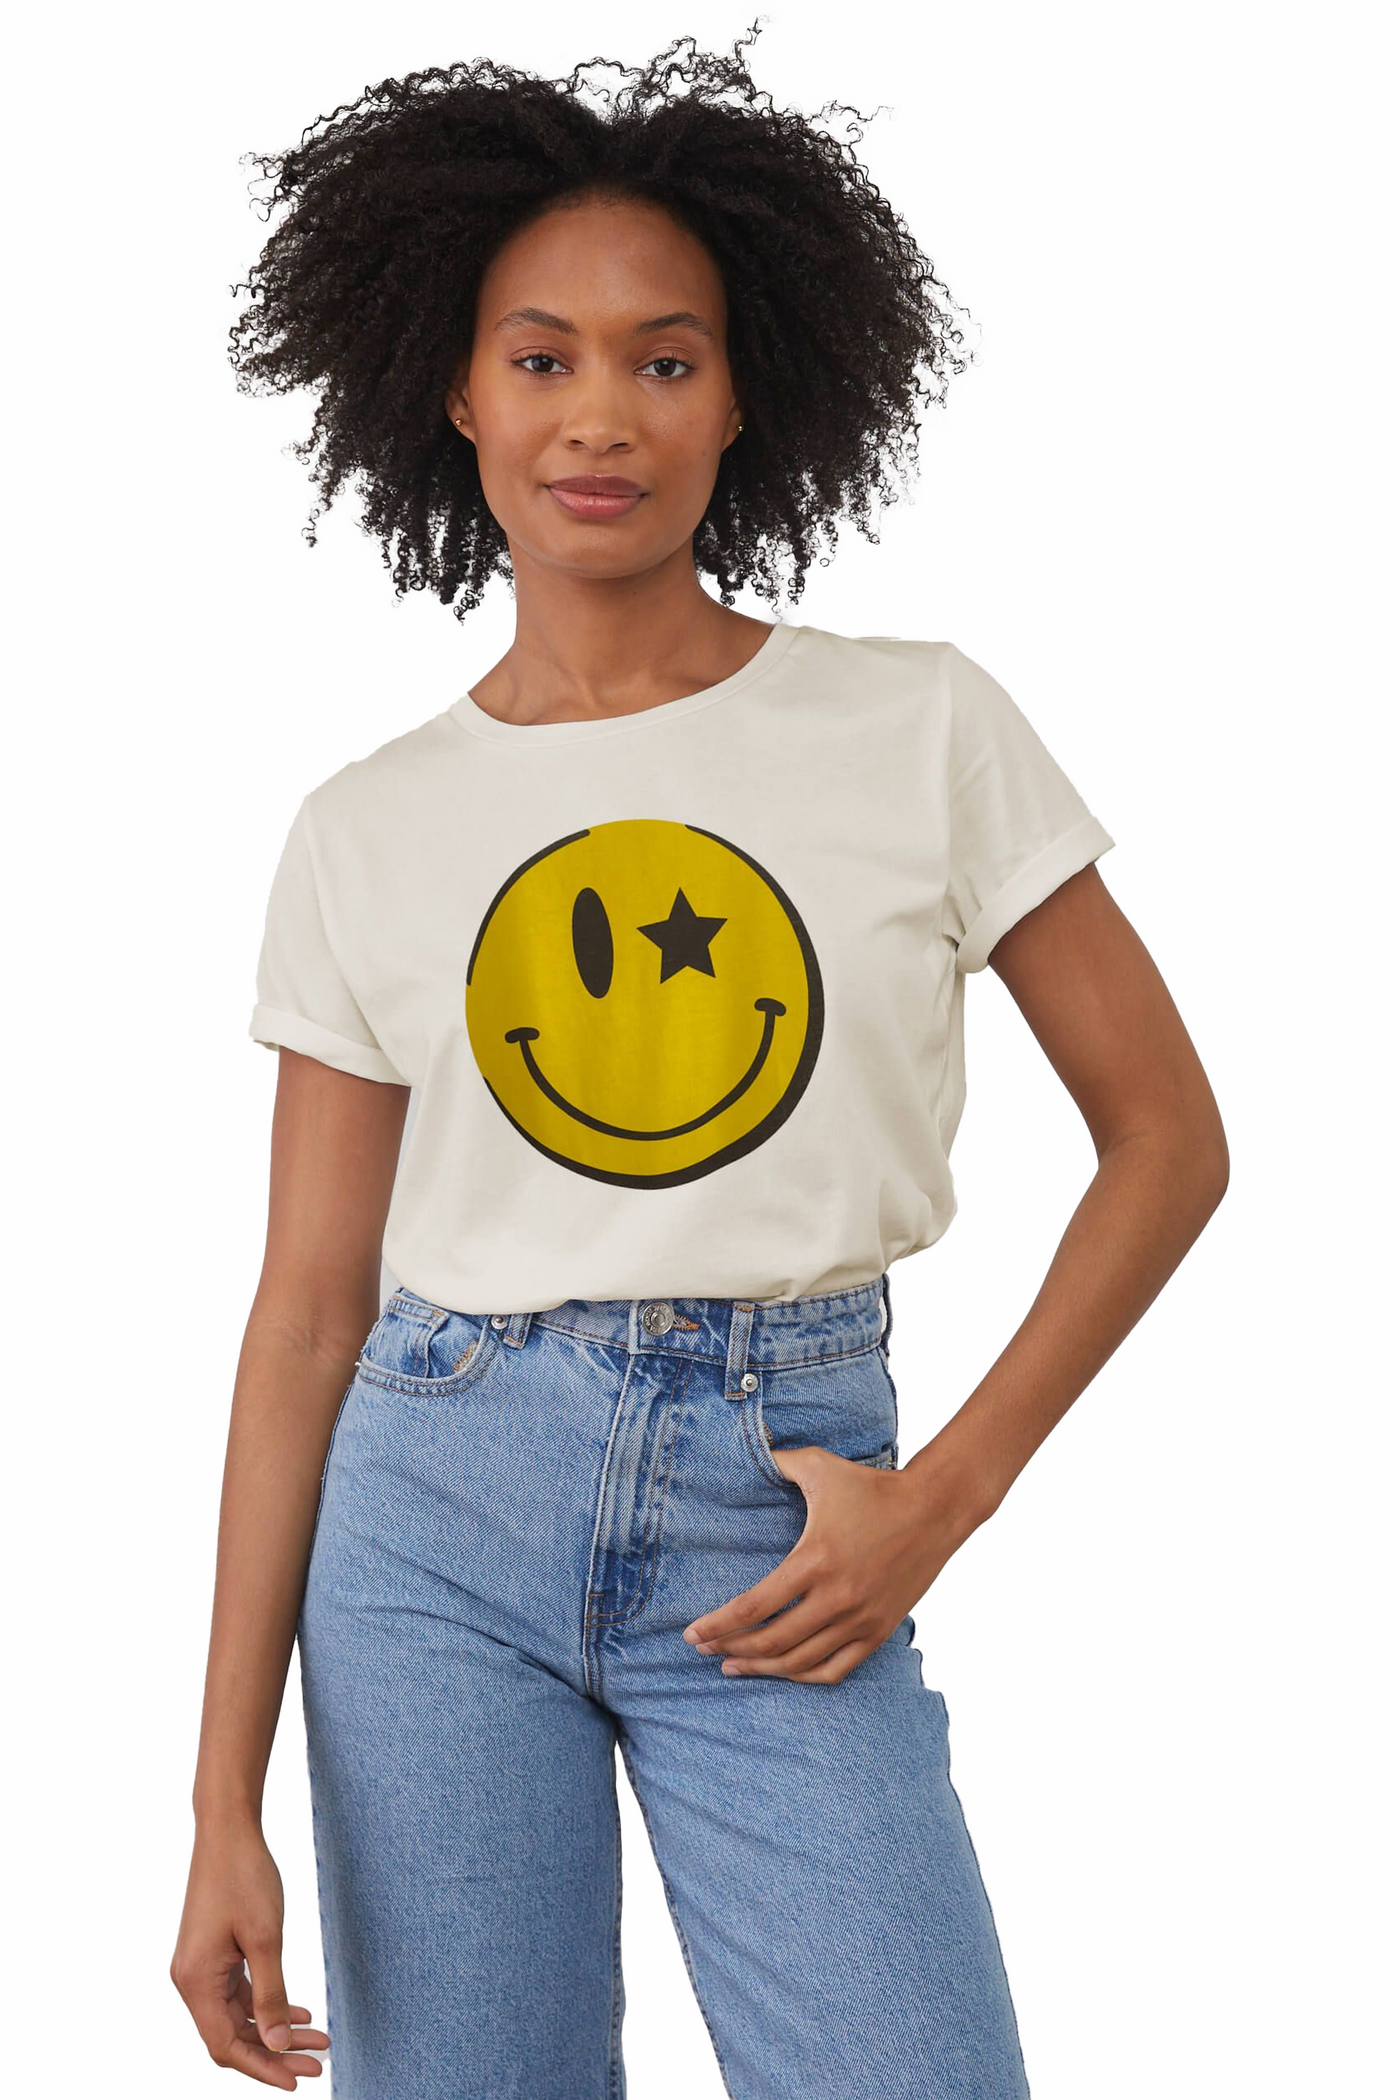 south parade lola short sleeve t-shirt: smiley